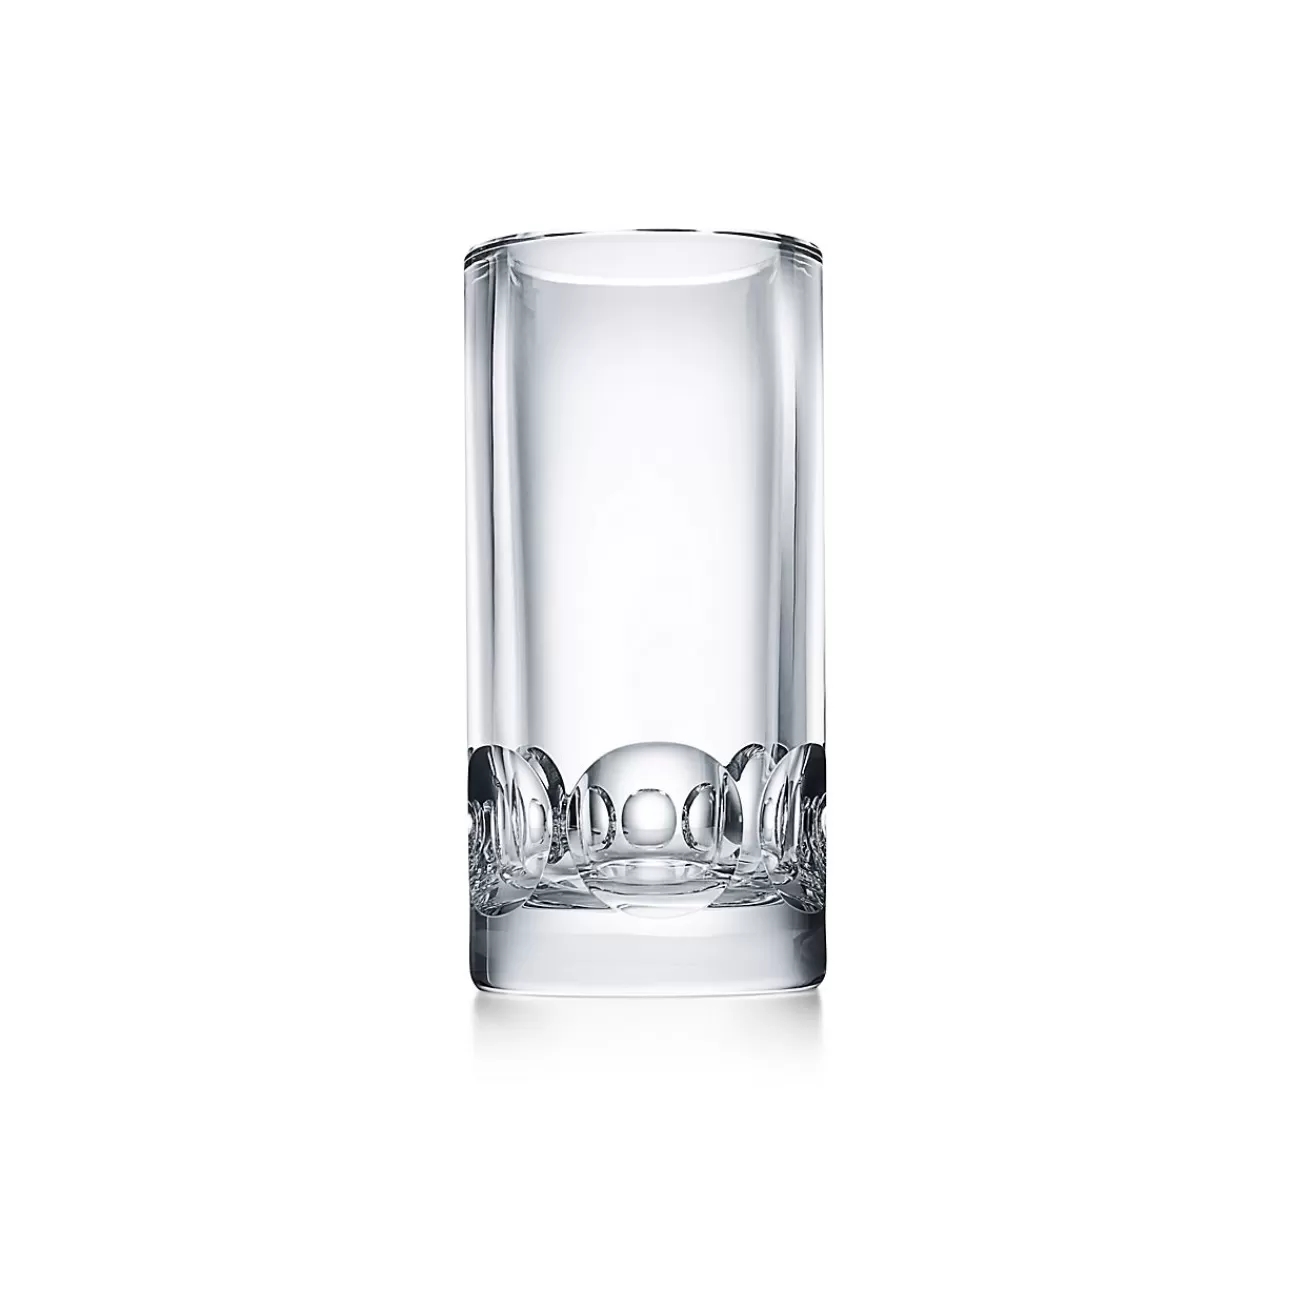 Tiffany & Co. Tiffany Pearl Cut vase in mouth-blown crystal glass, 14" high. | ^ Decor